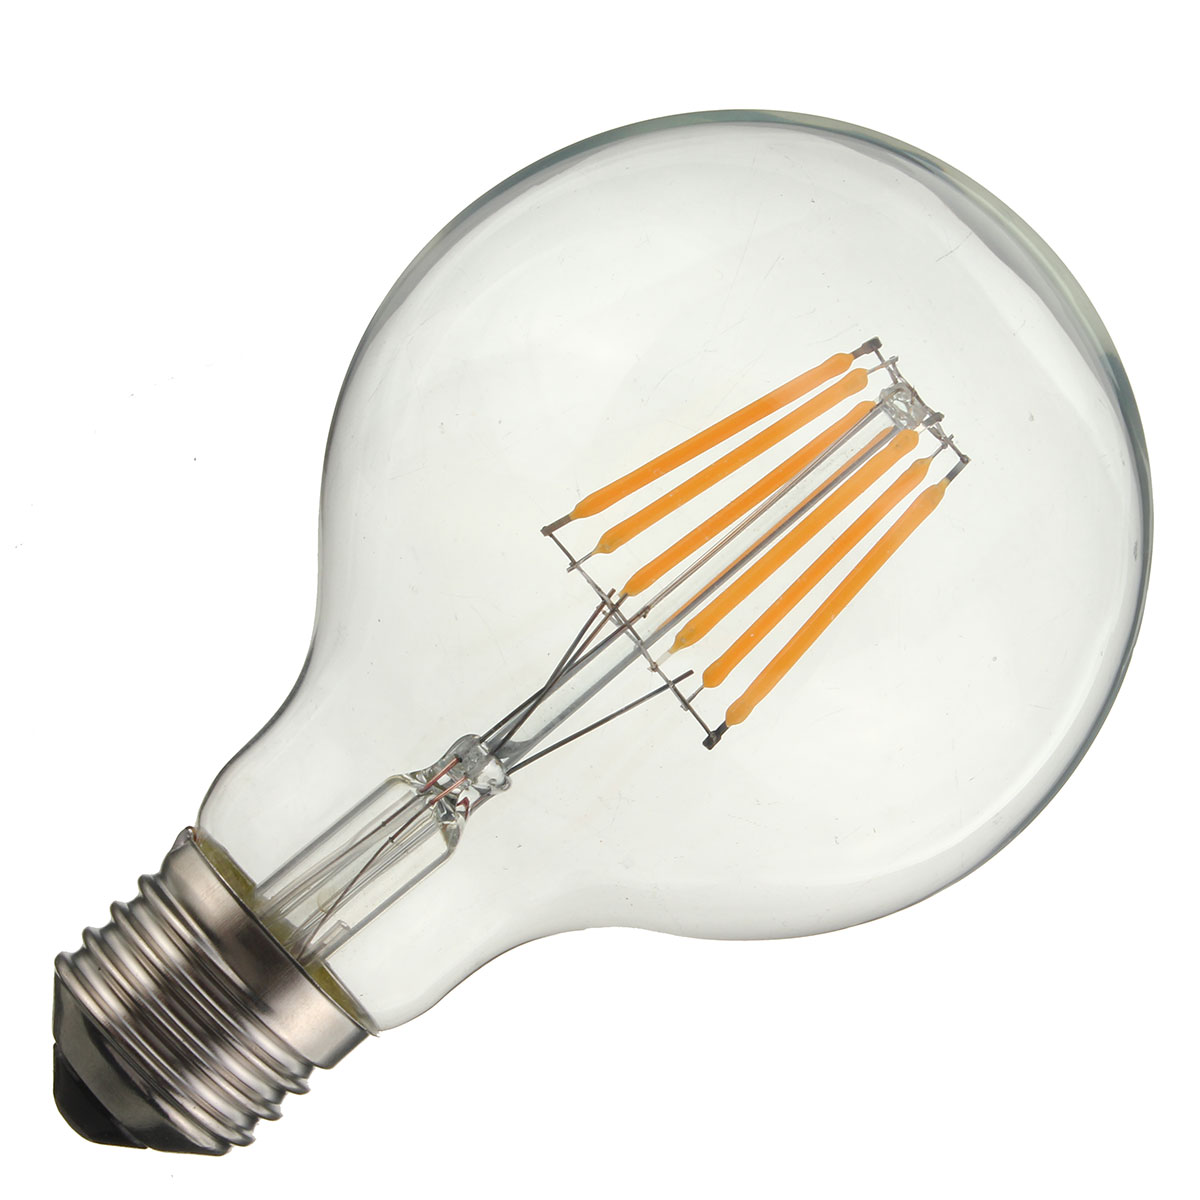 Dimmable-G80-E27-6W-COB-Warm-White-600Lumens-Retro-Vintage-Light-Lamp-Bulb-AC110V-AC220V-1074483-5